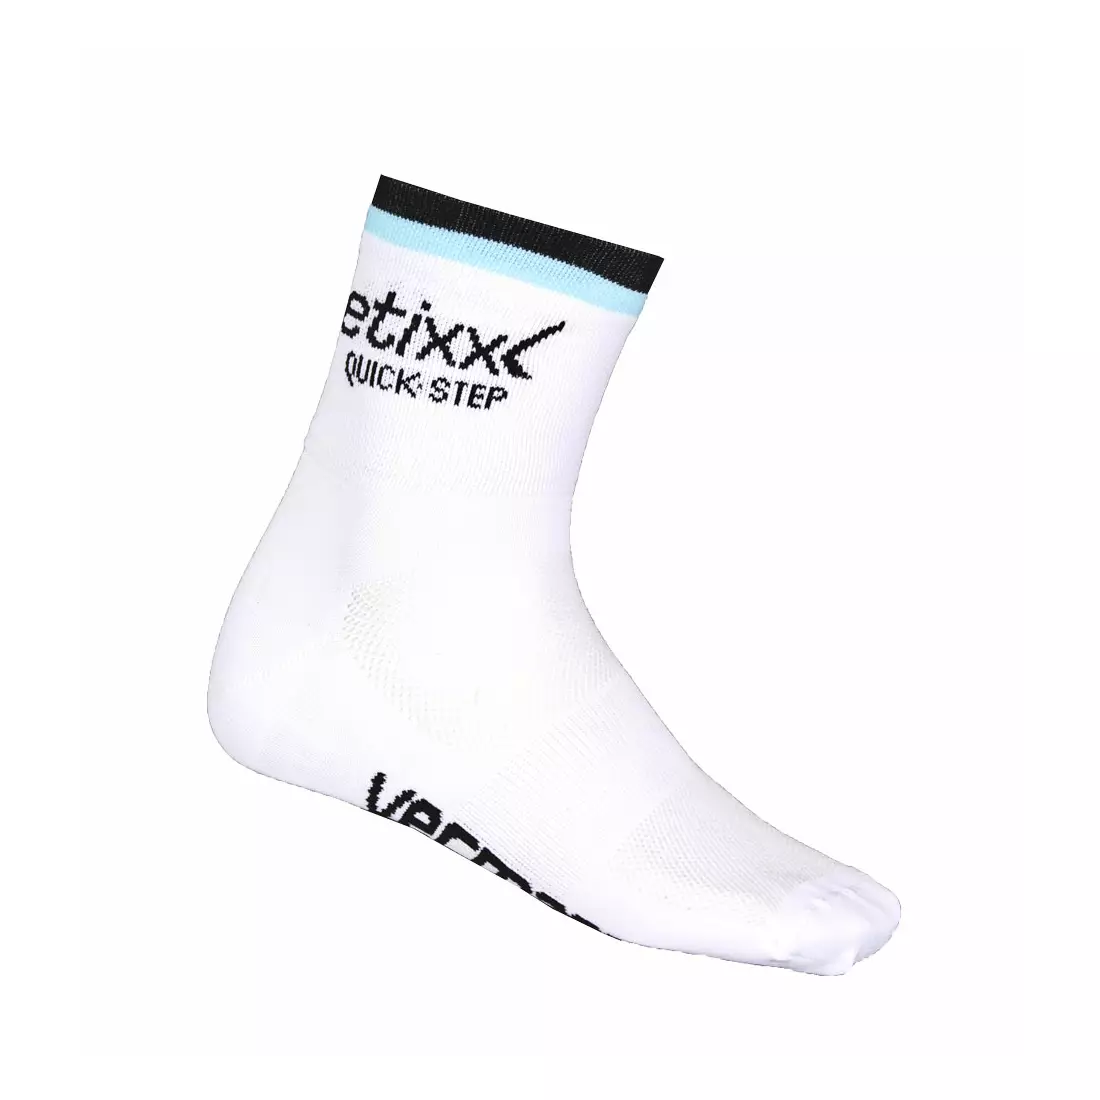 ETIXX QUICKSTEP cycling socks 2015